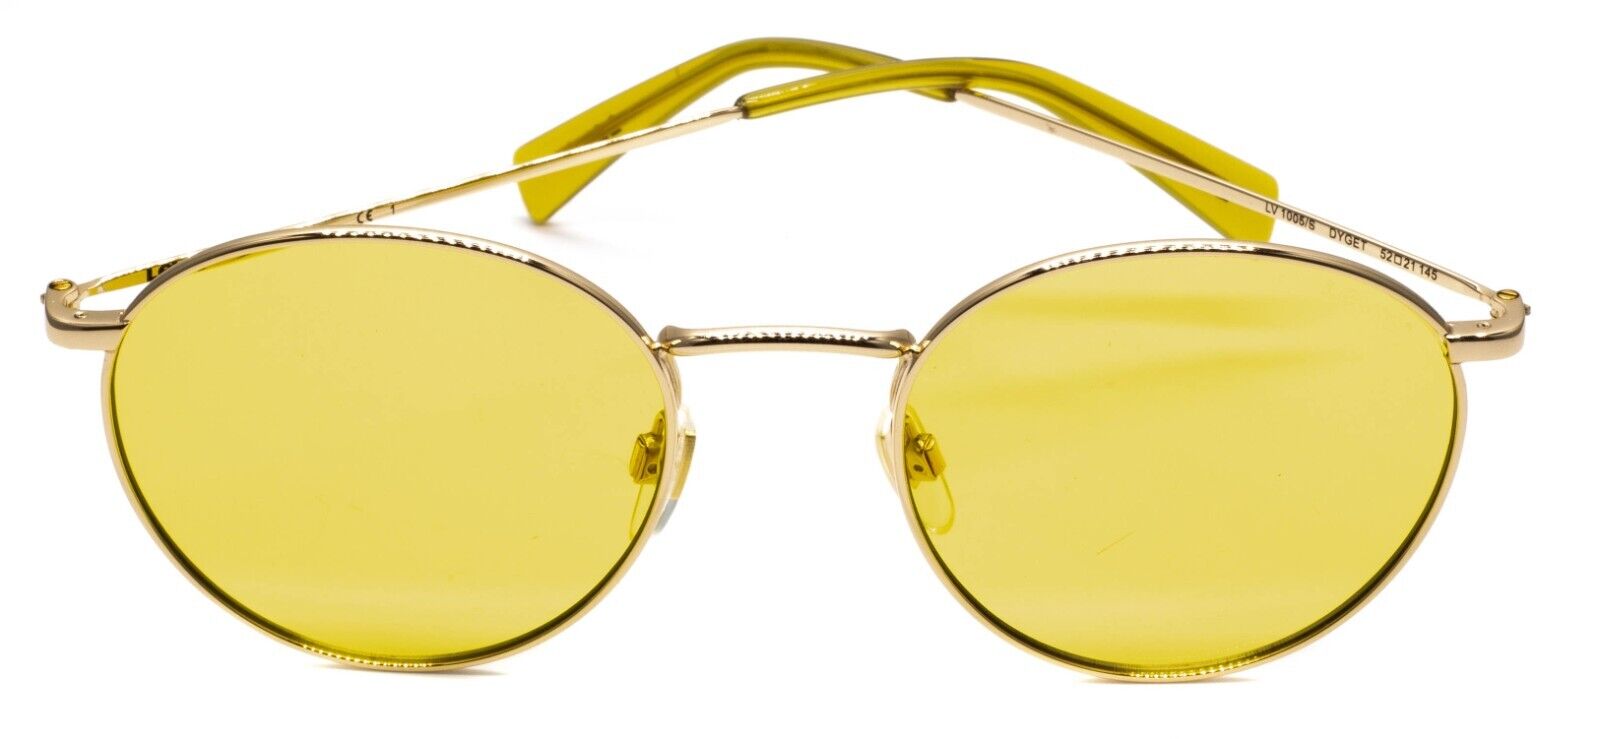 Levi's LV 1005/S Round Sunglasses